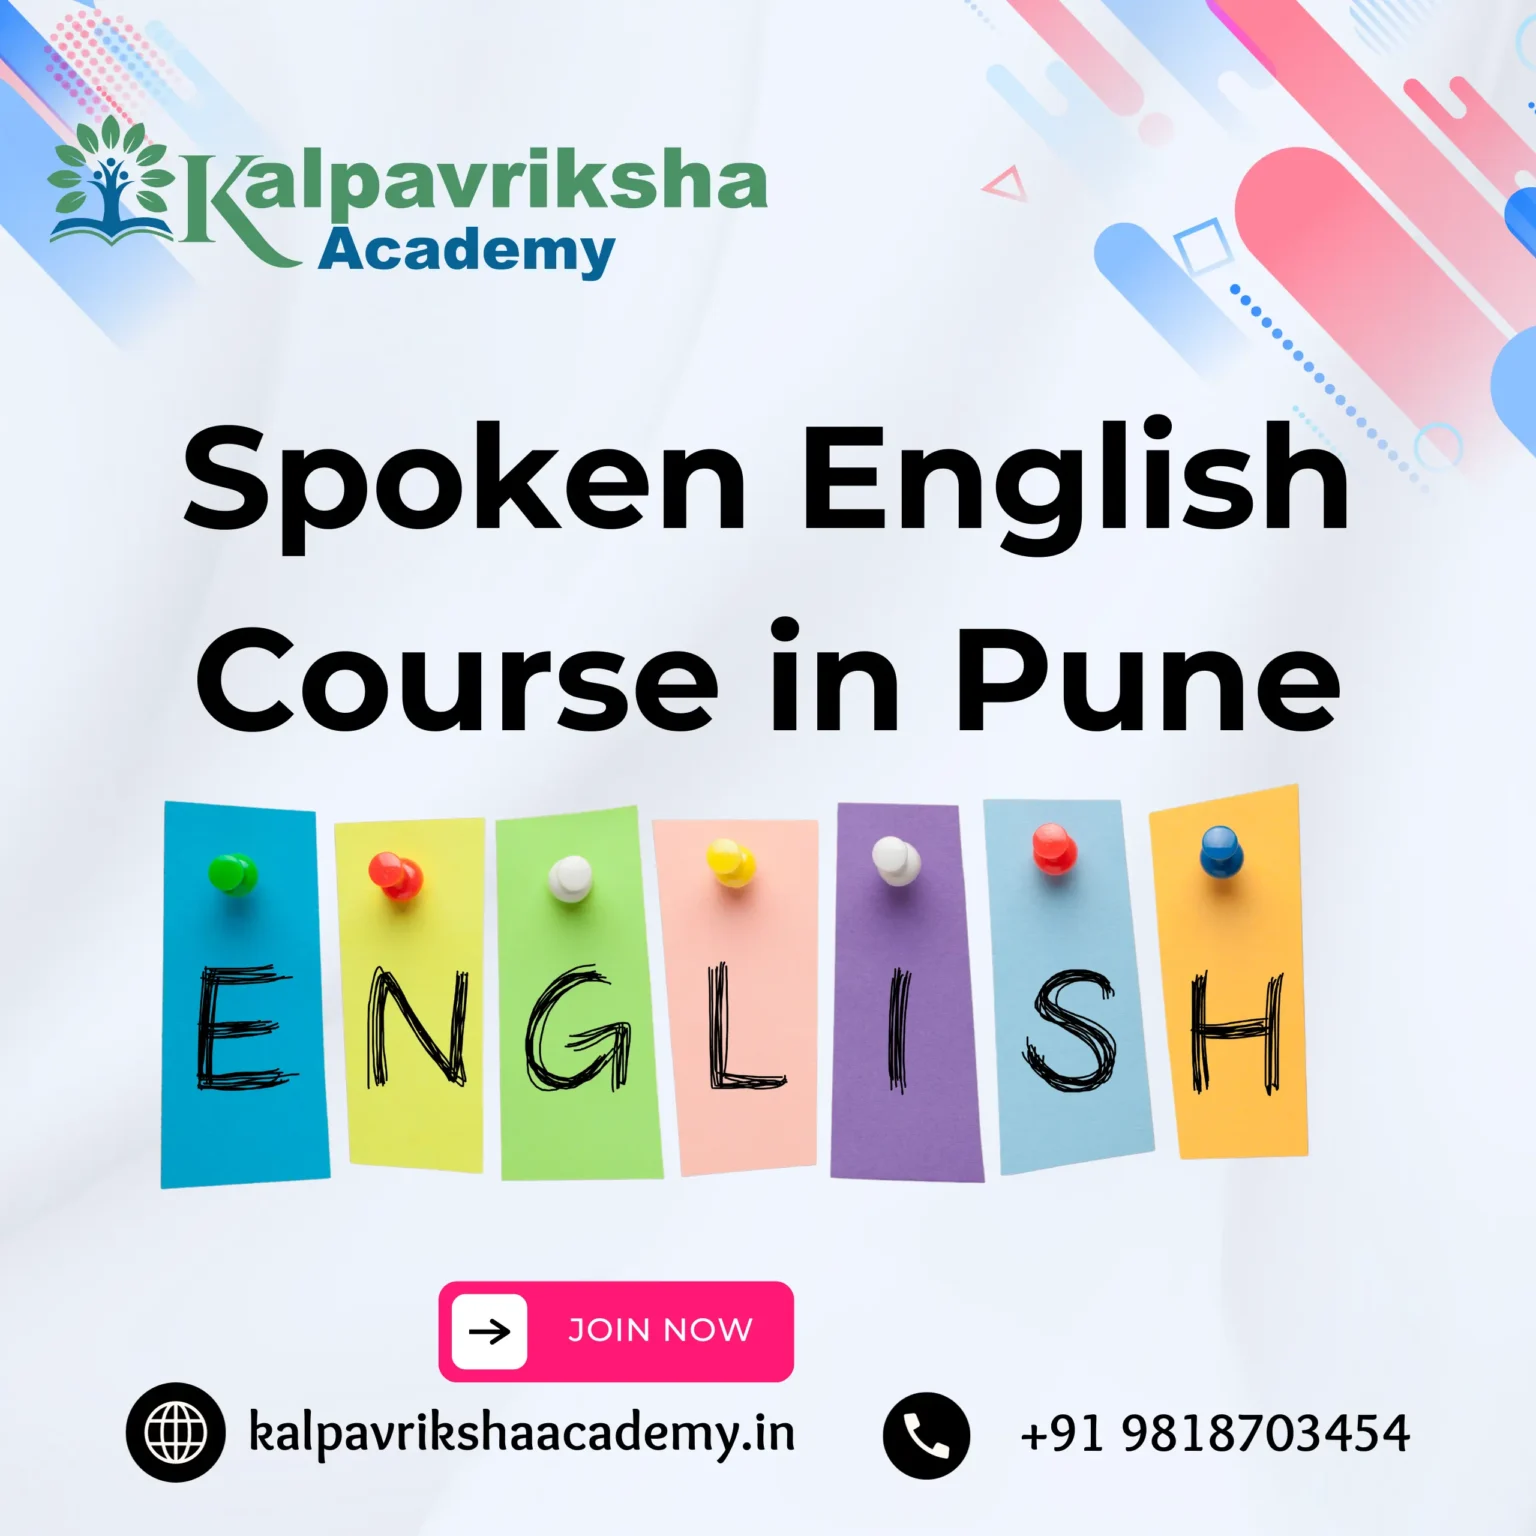 Online Spoken English Course in Pune - Kalpavriksha Academy